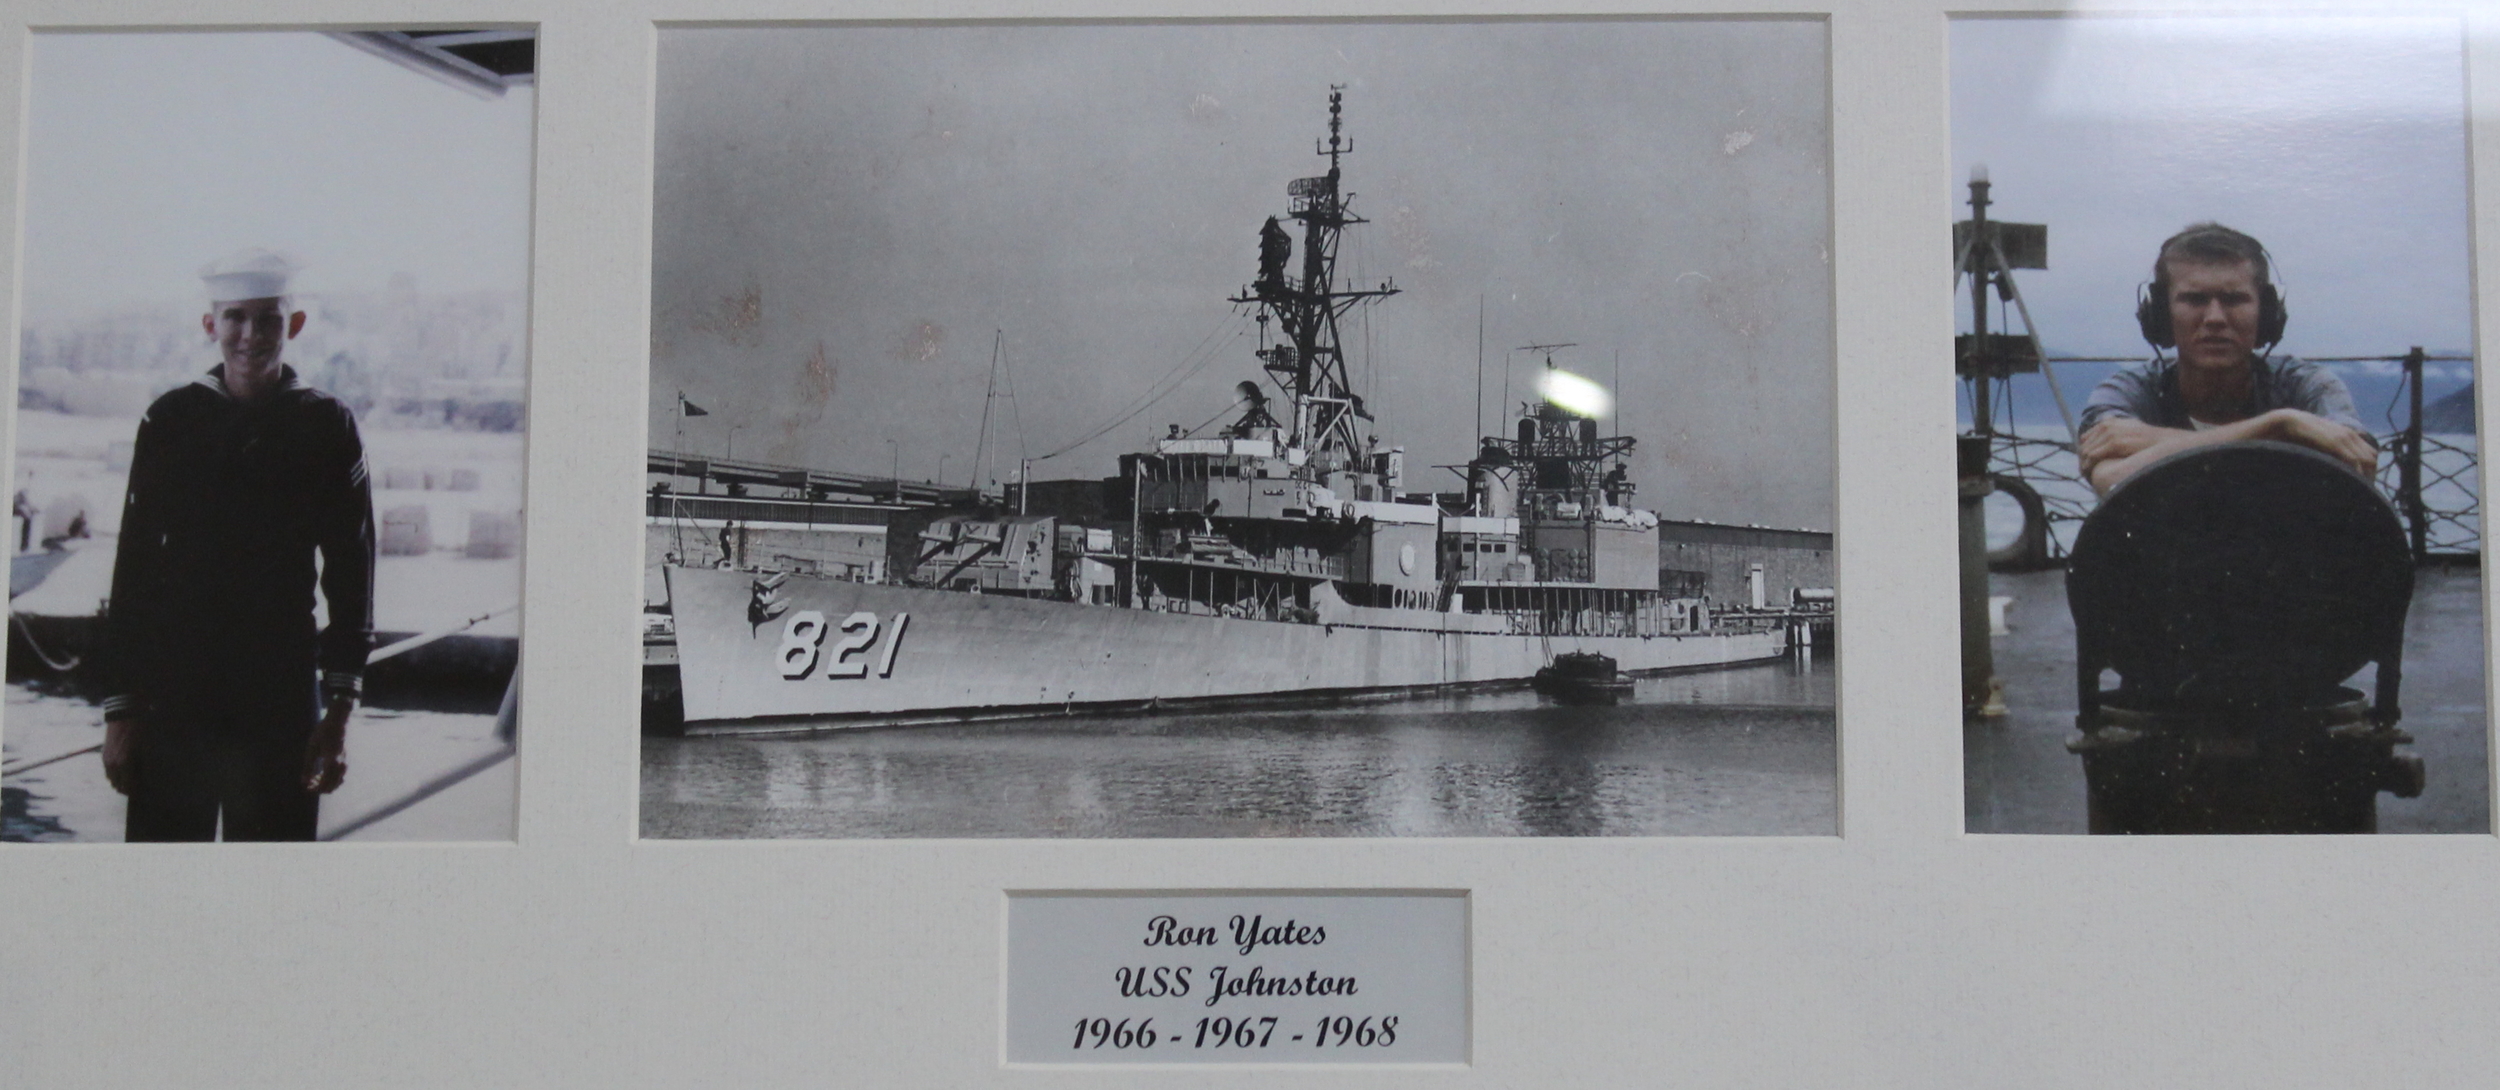 Ron Yates aboard the USS Johnston